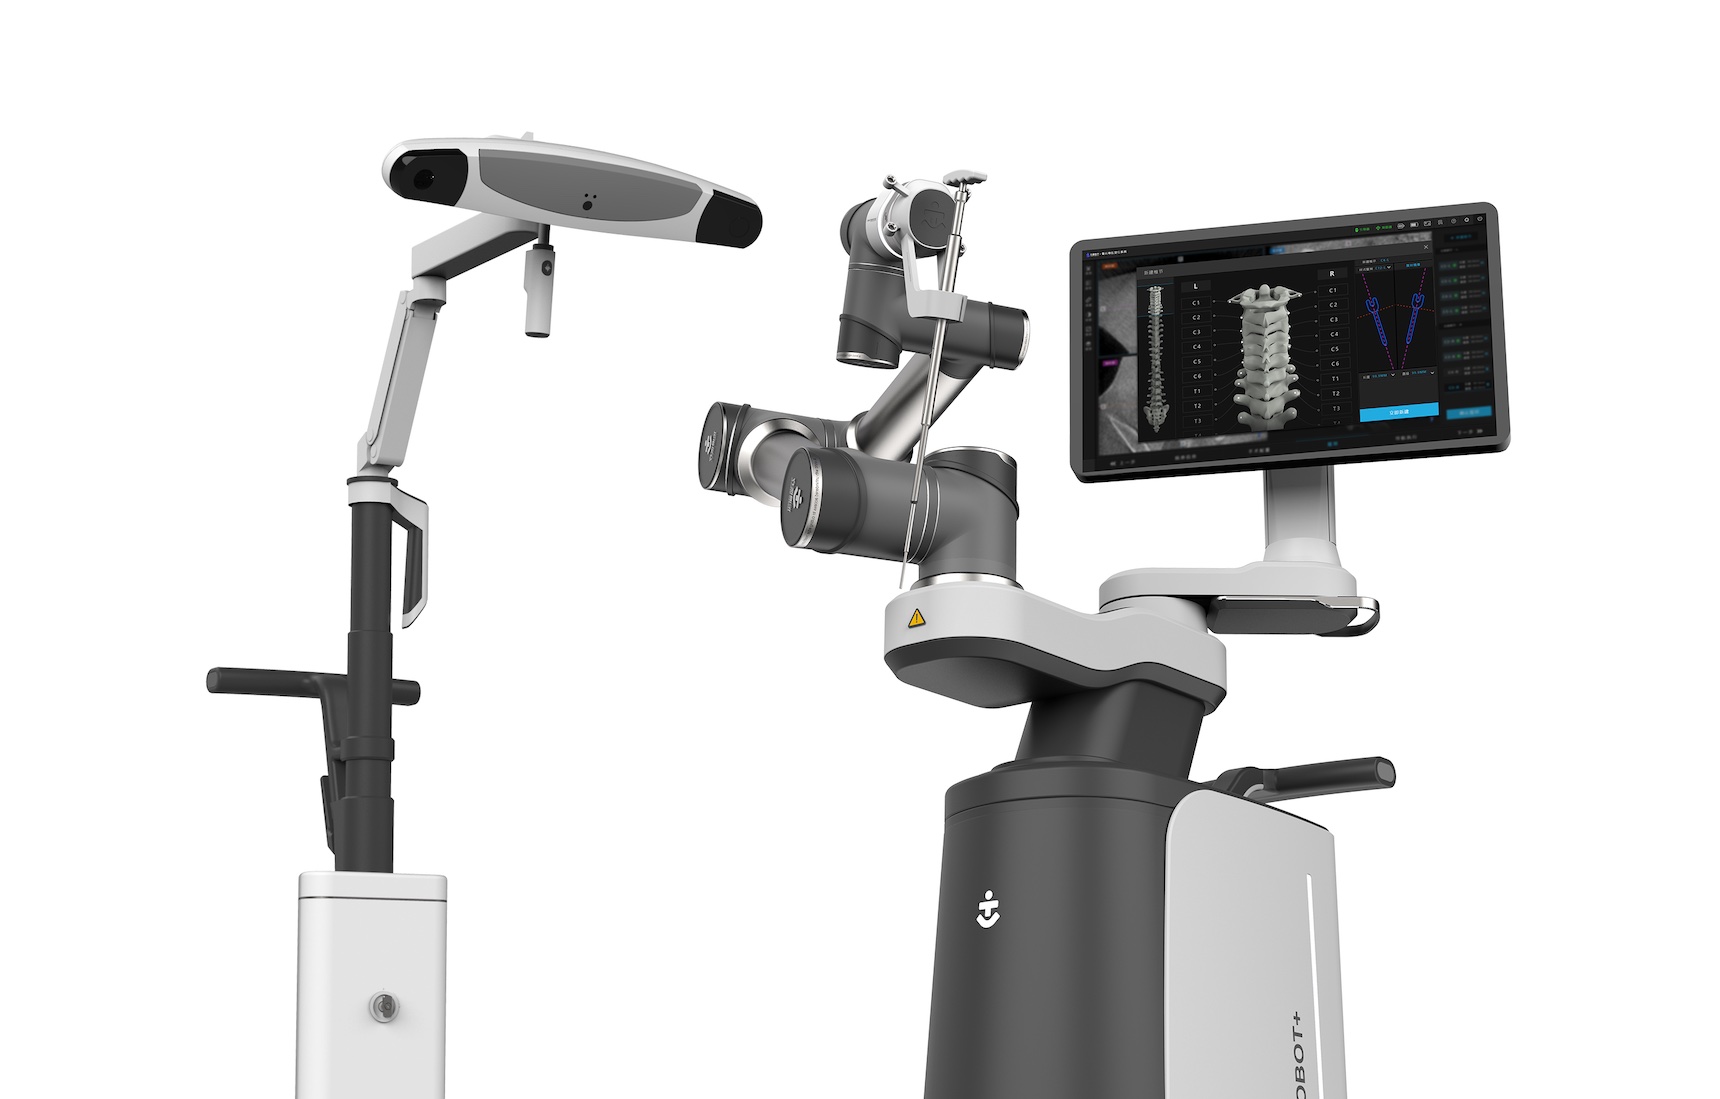 MUSE Design Winners - NS100 Orthopedic Robotic Surgery Platform